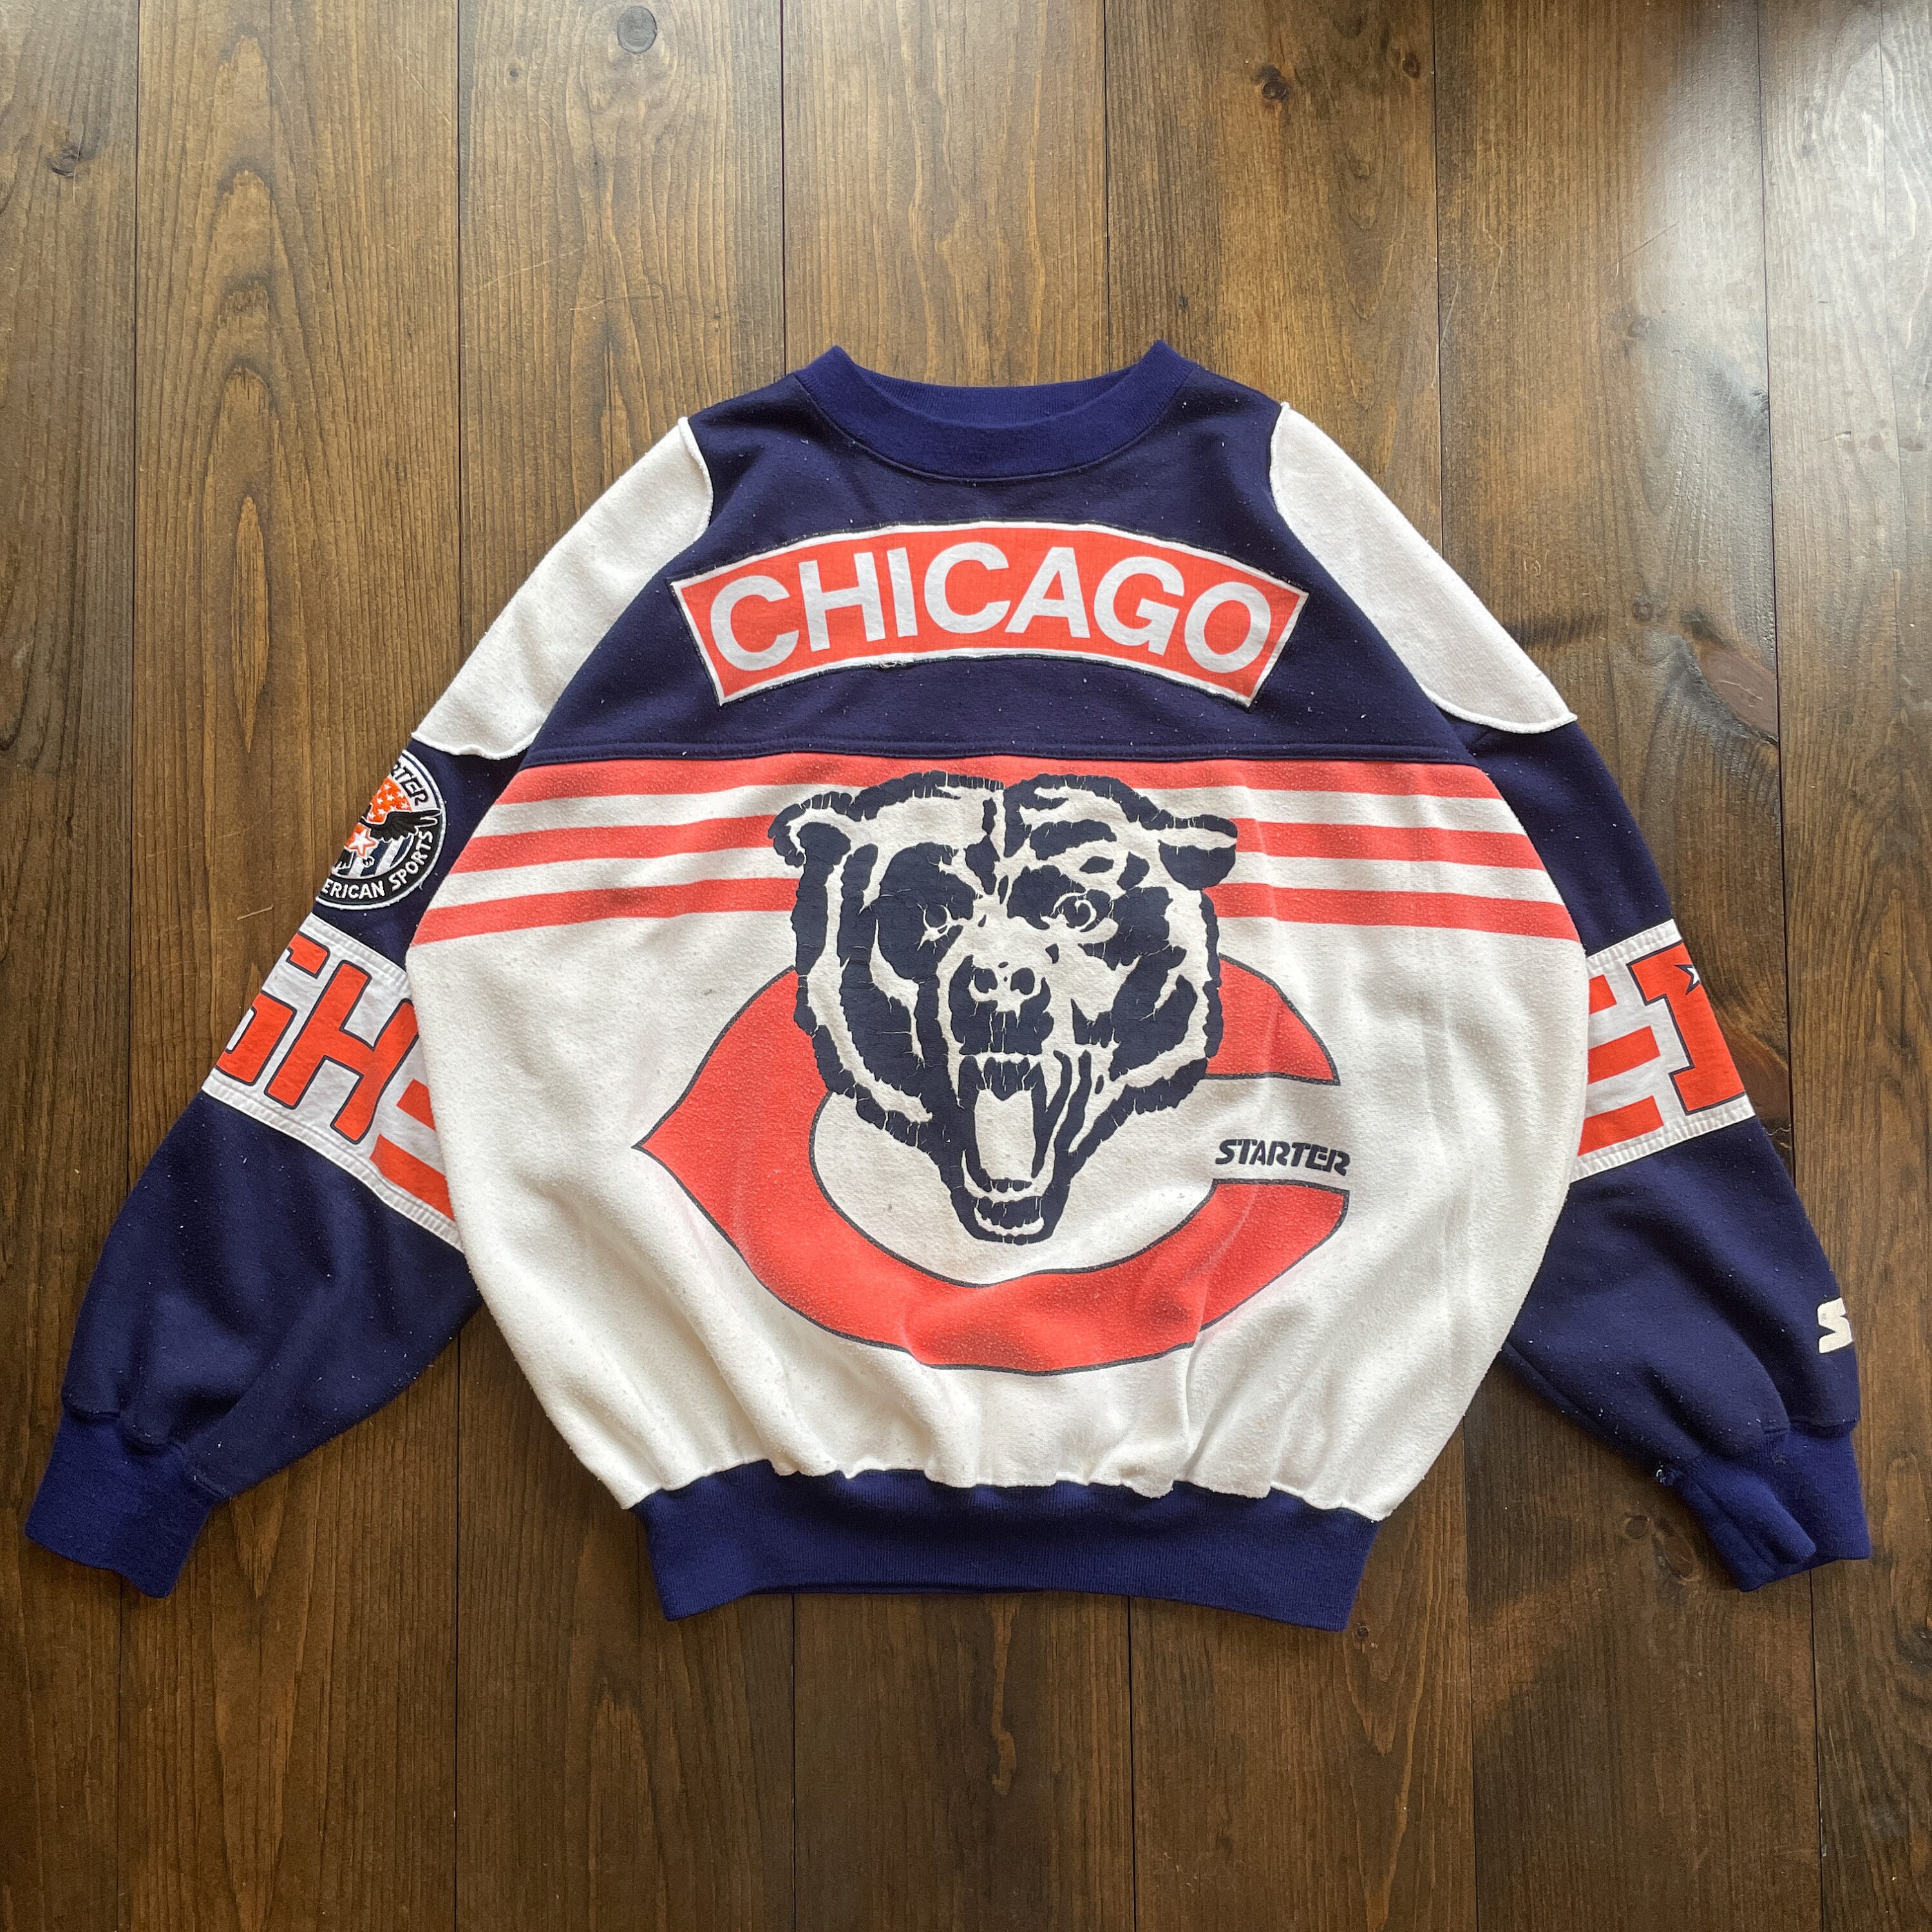 Vintage 1990s Chicago Bears Starter NFL American Football All 